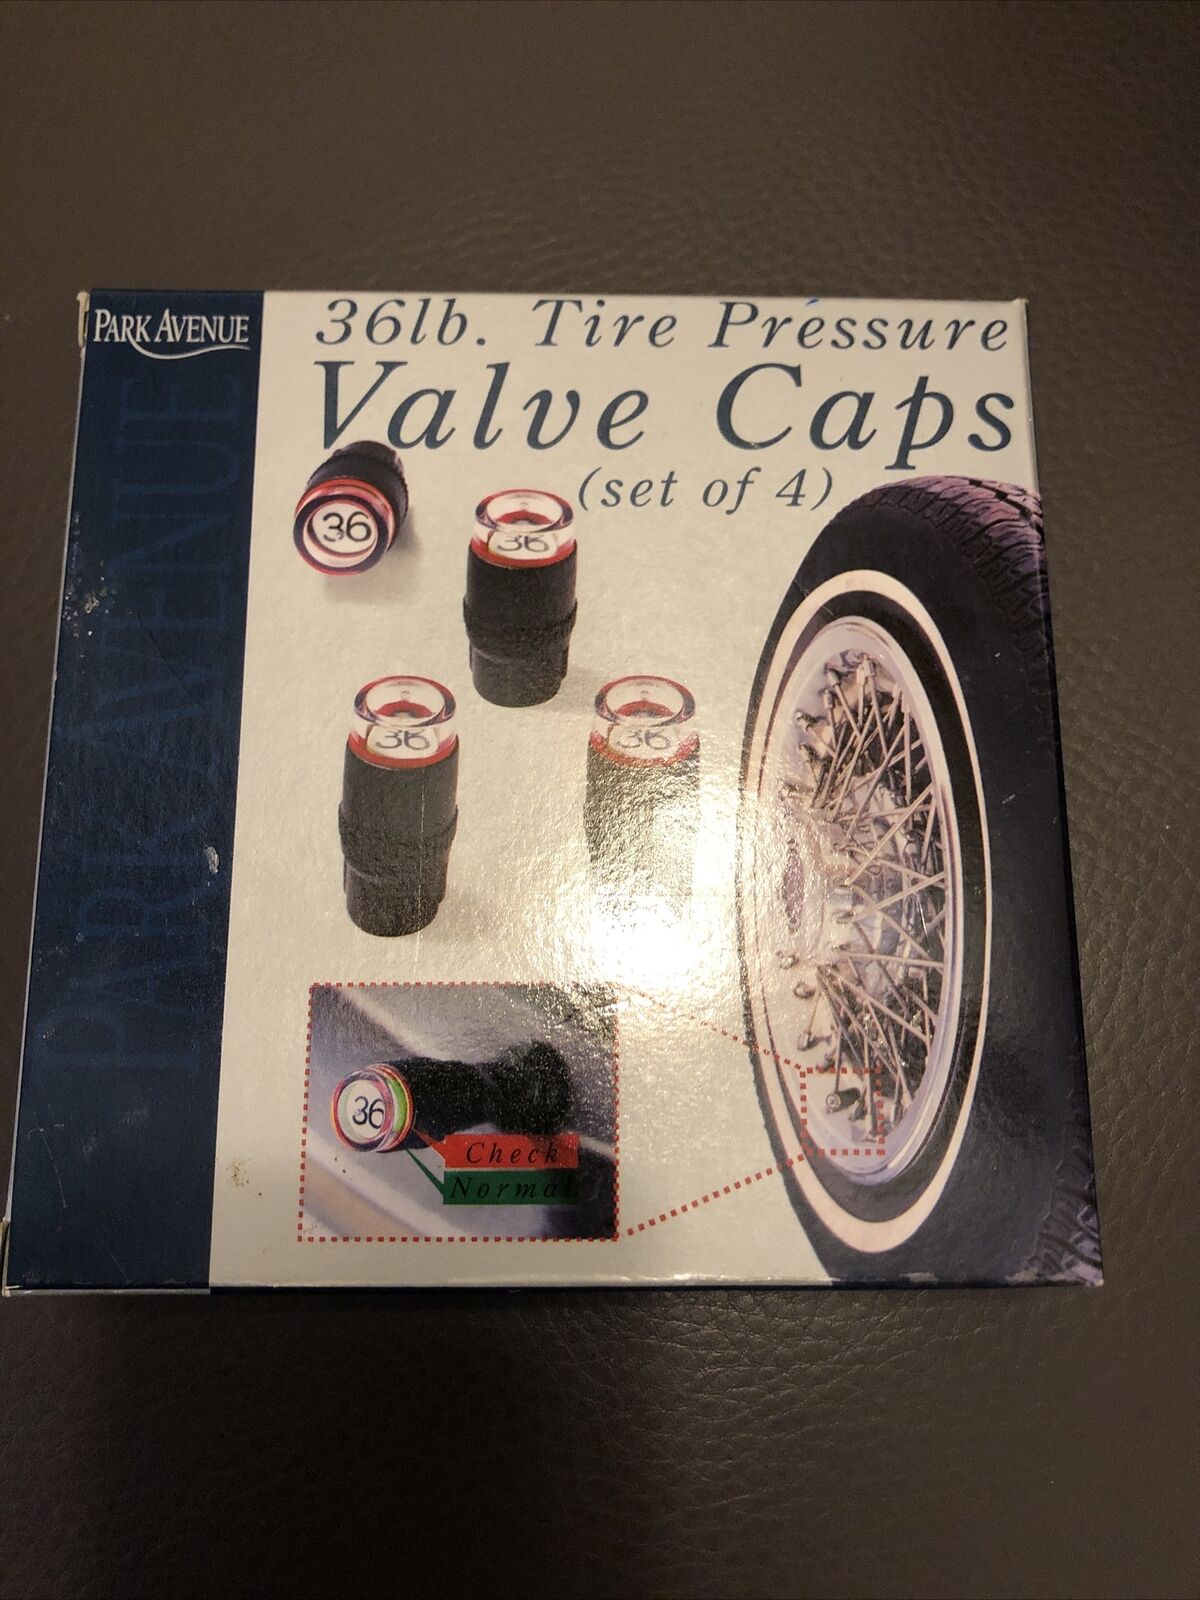 Park Avenue Tire Pressure Valve Caps 36lb. Set of 4)